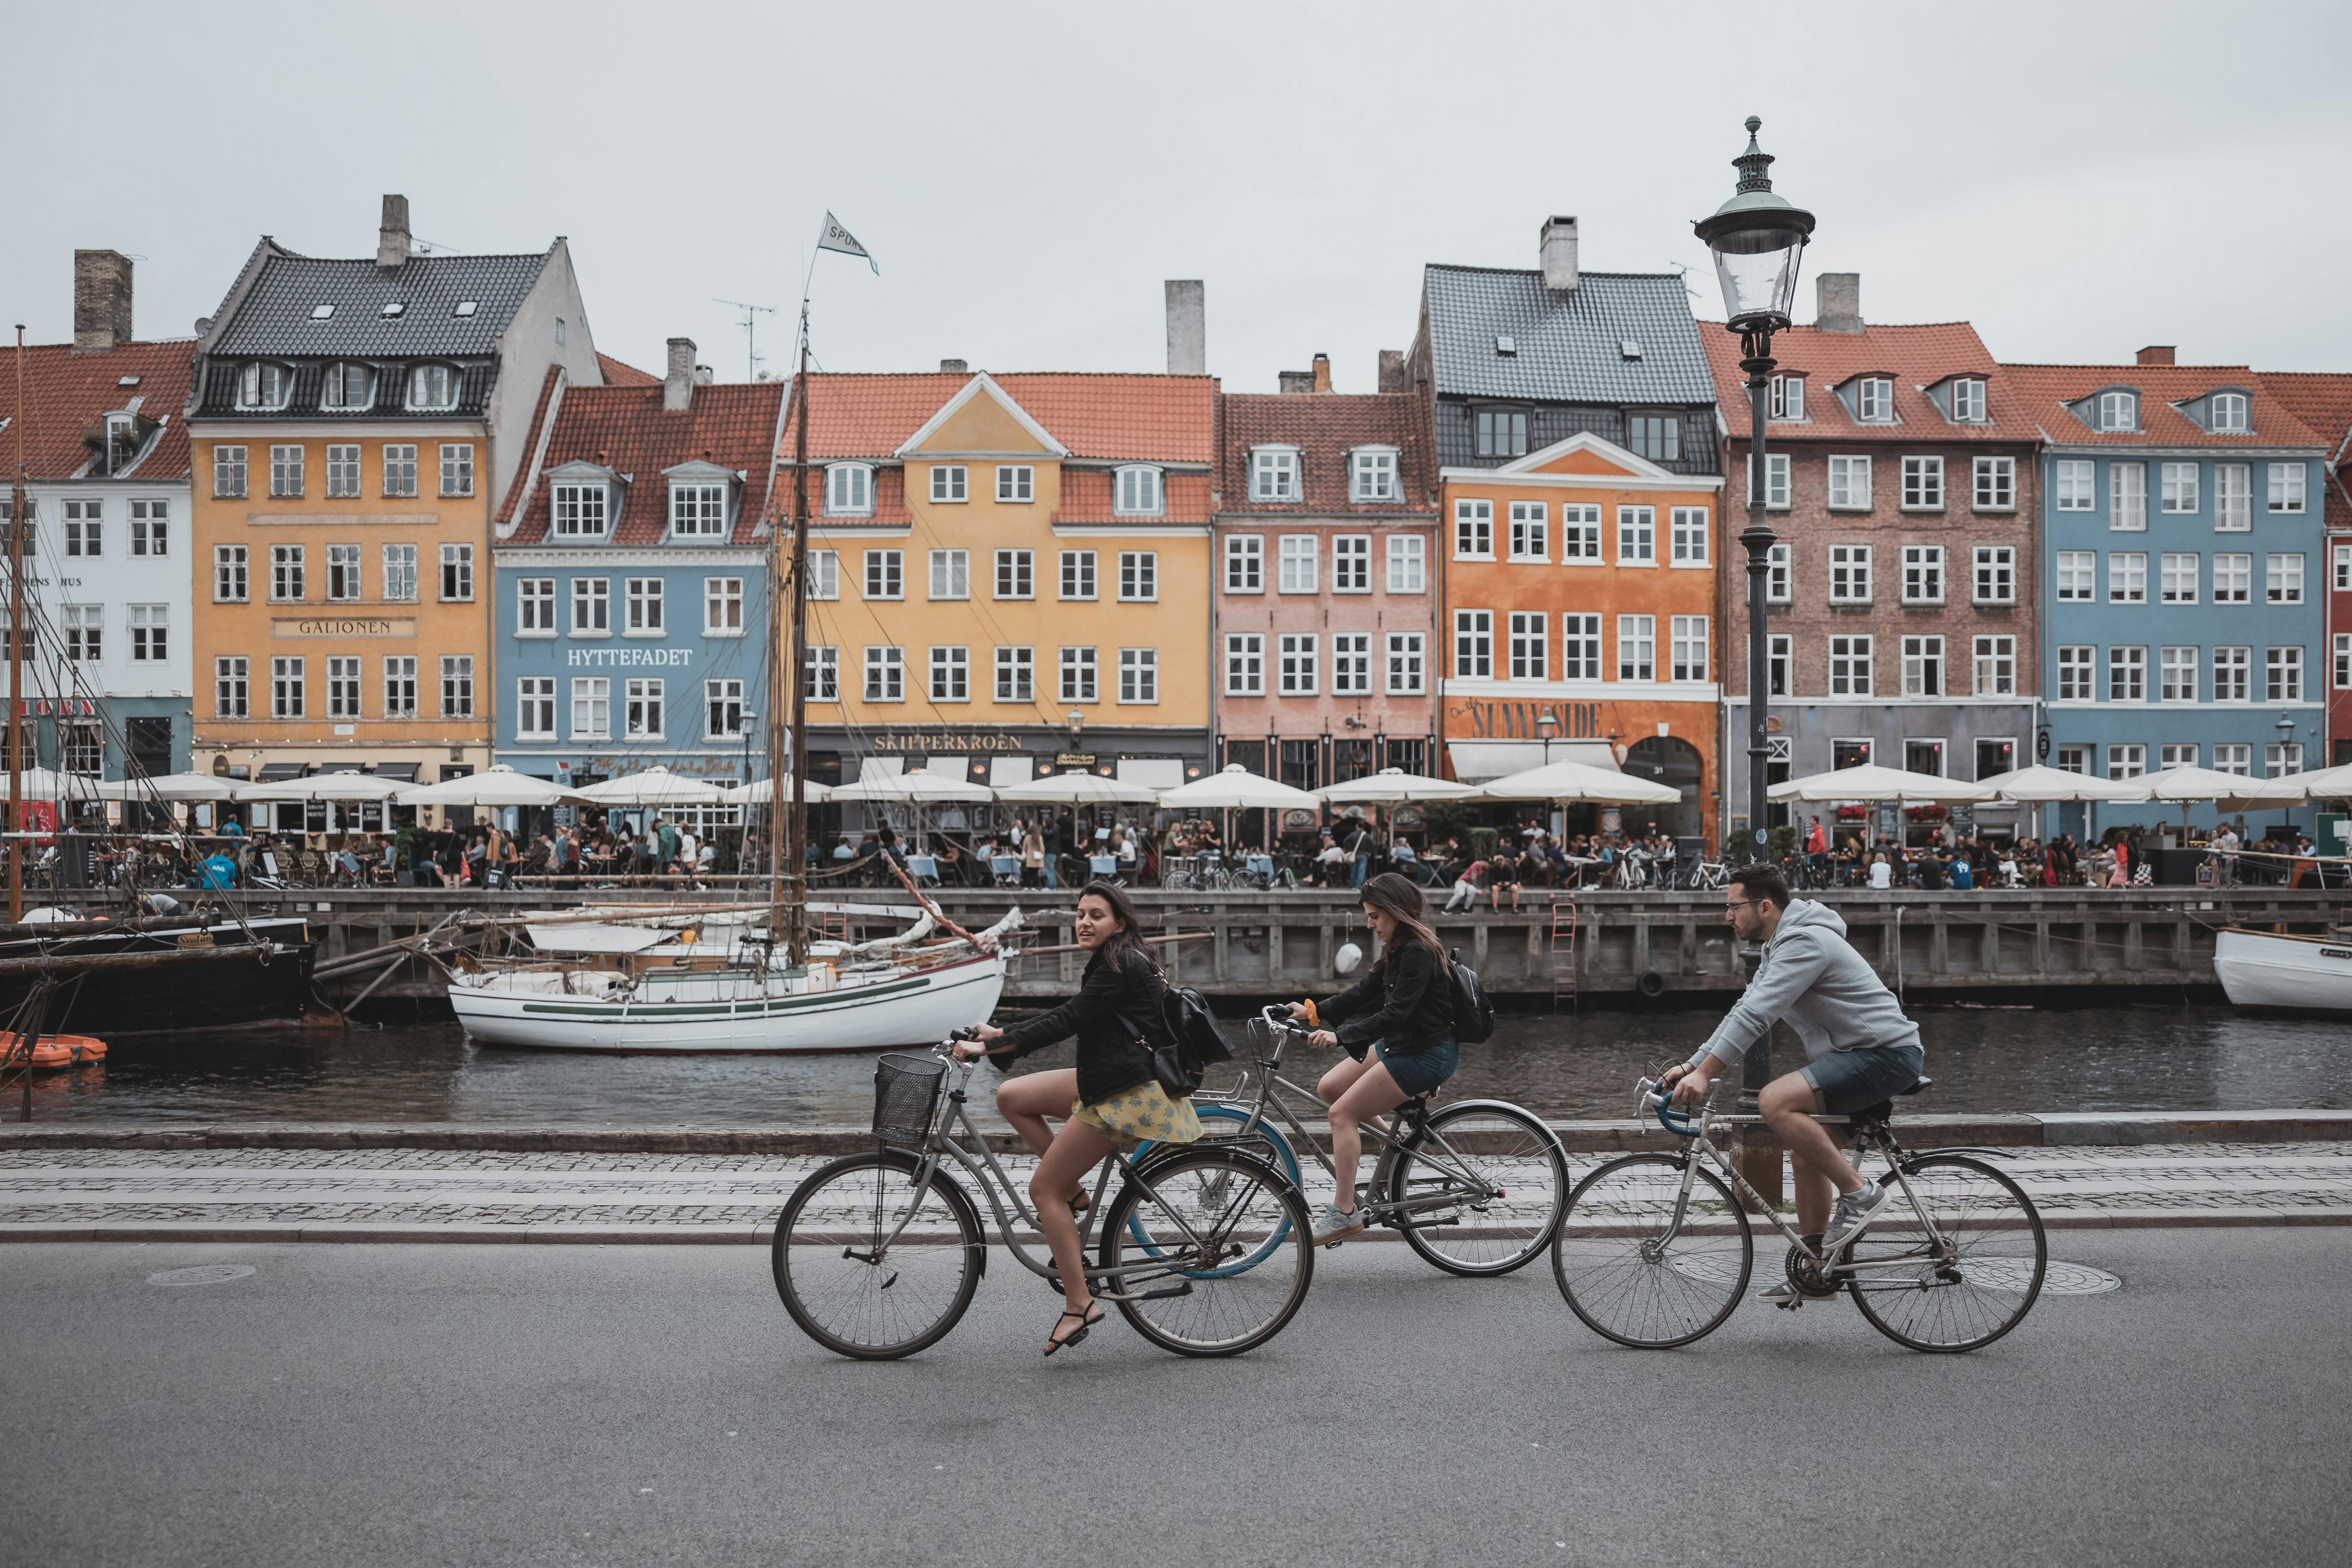 Copenhagen 3-hour private biking tour